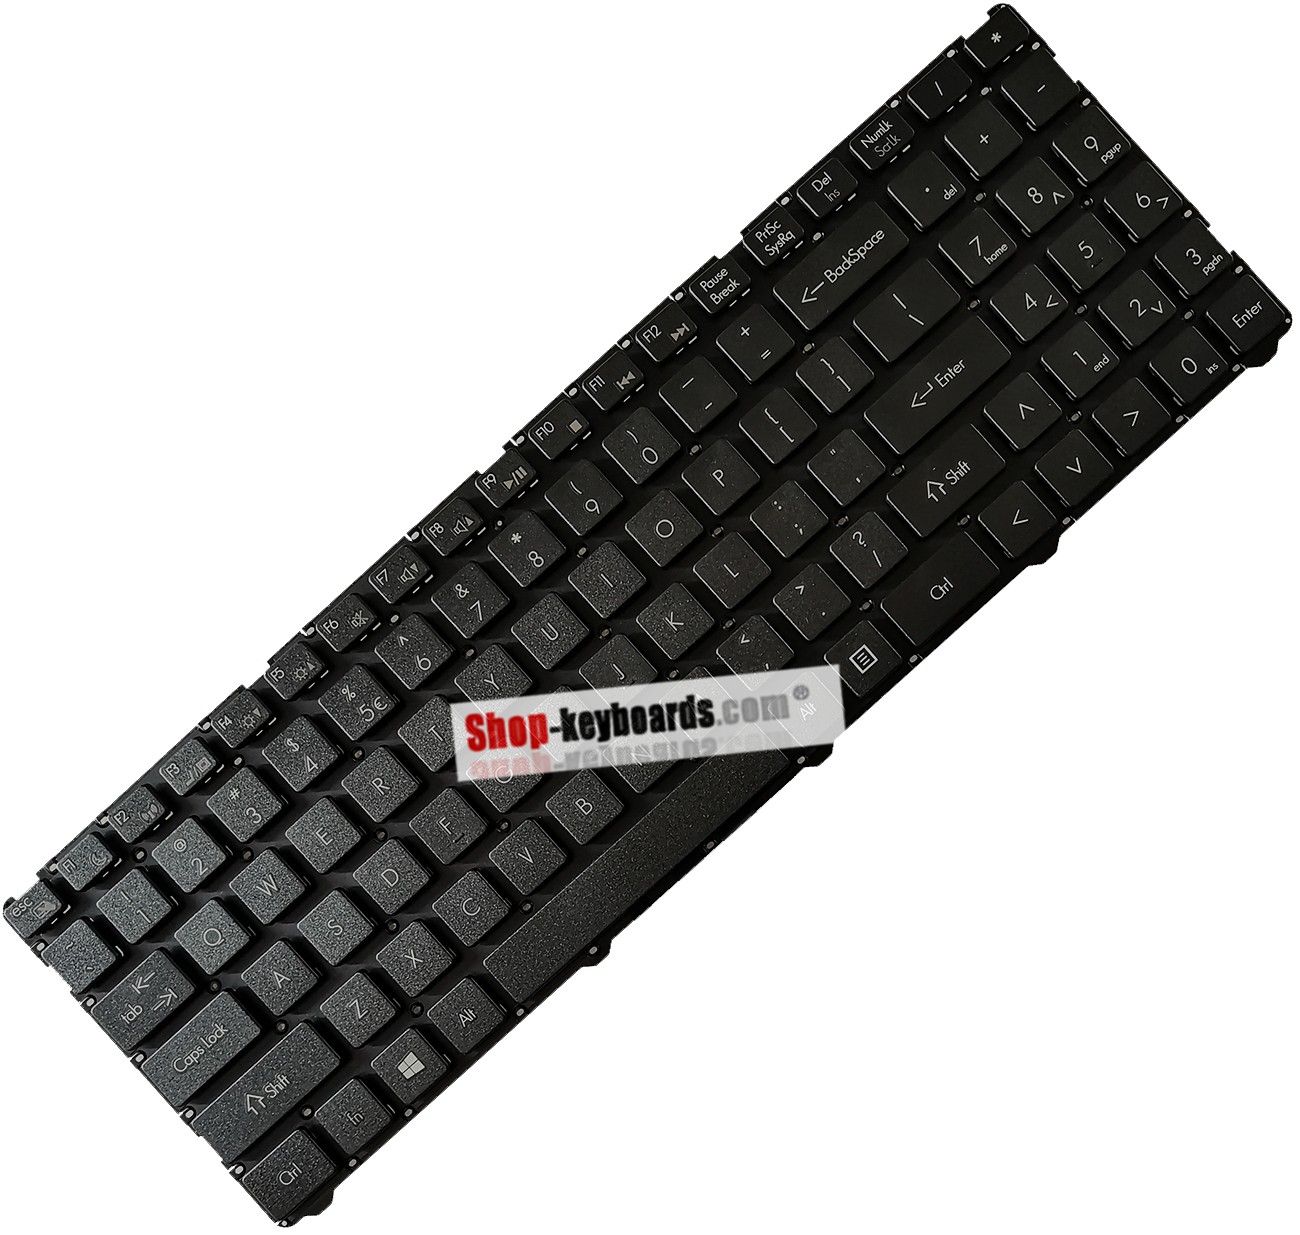 LG MP-12K73SU-9207 Keyboard replacement